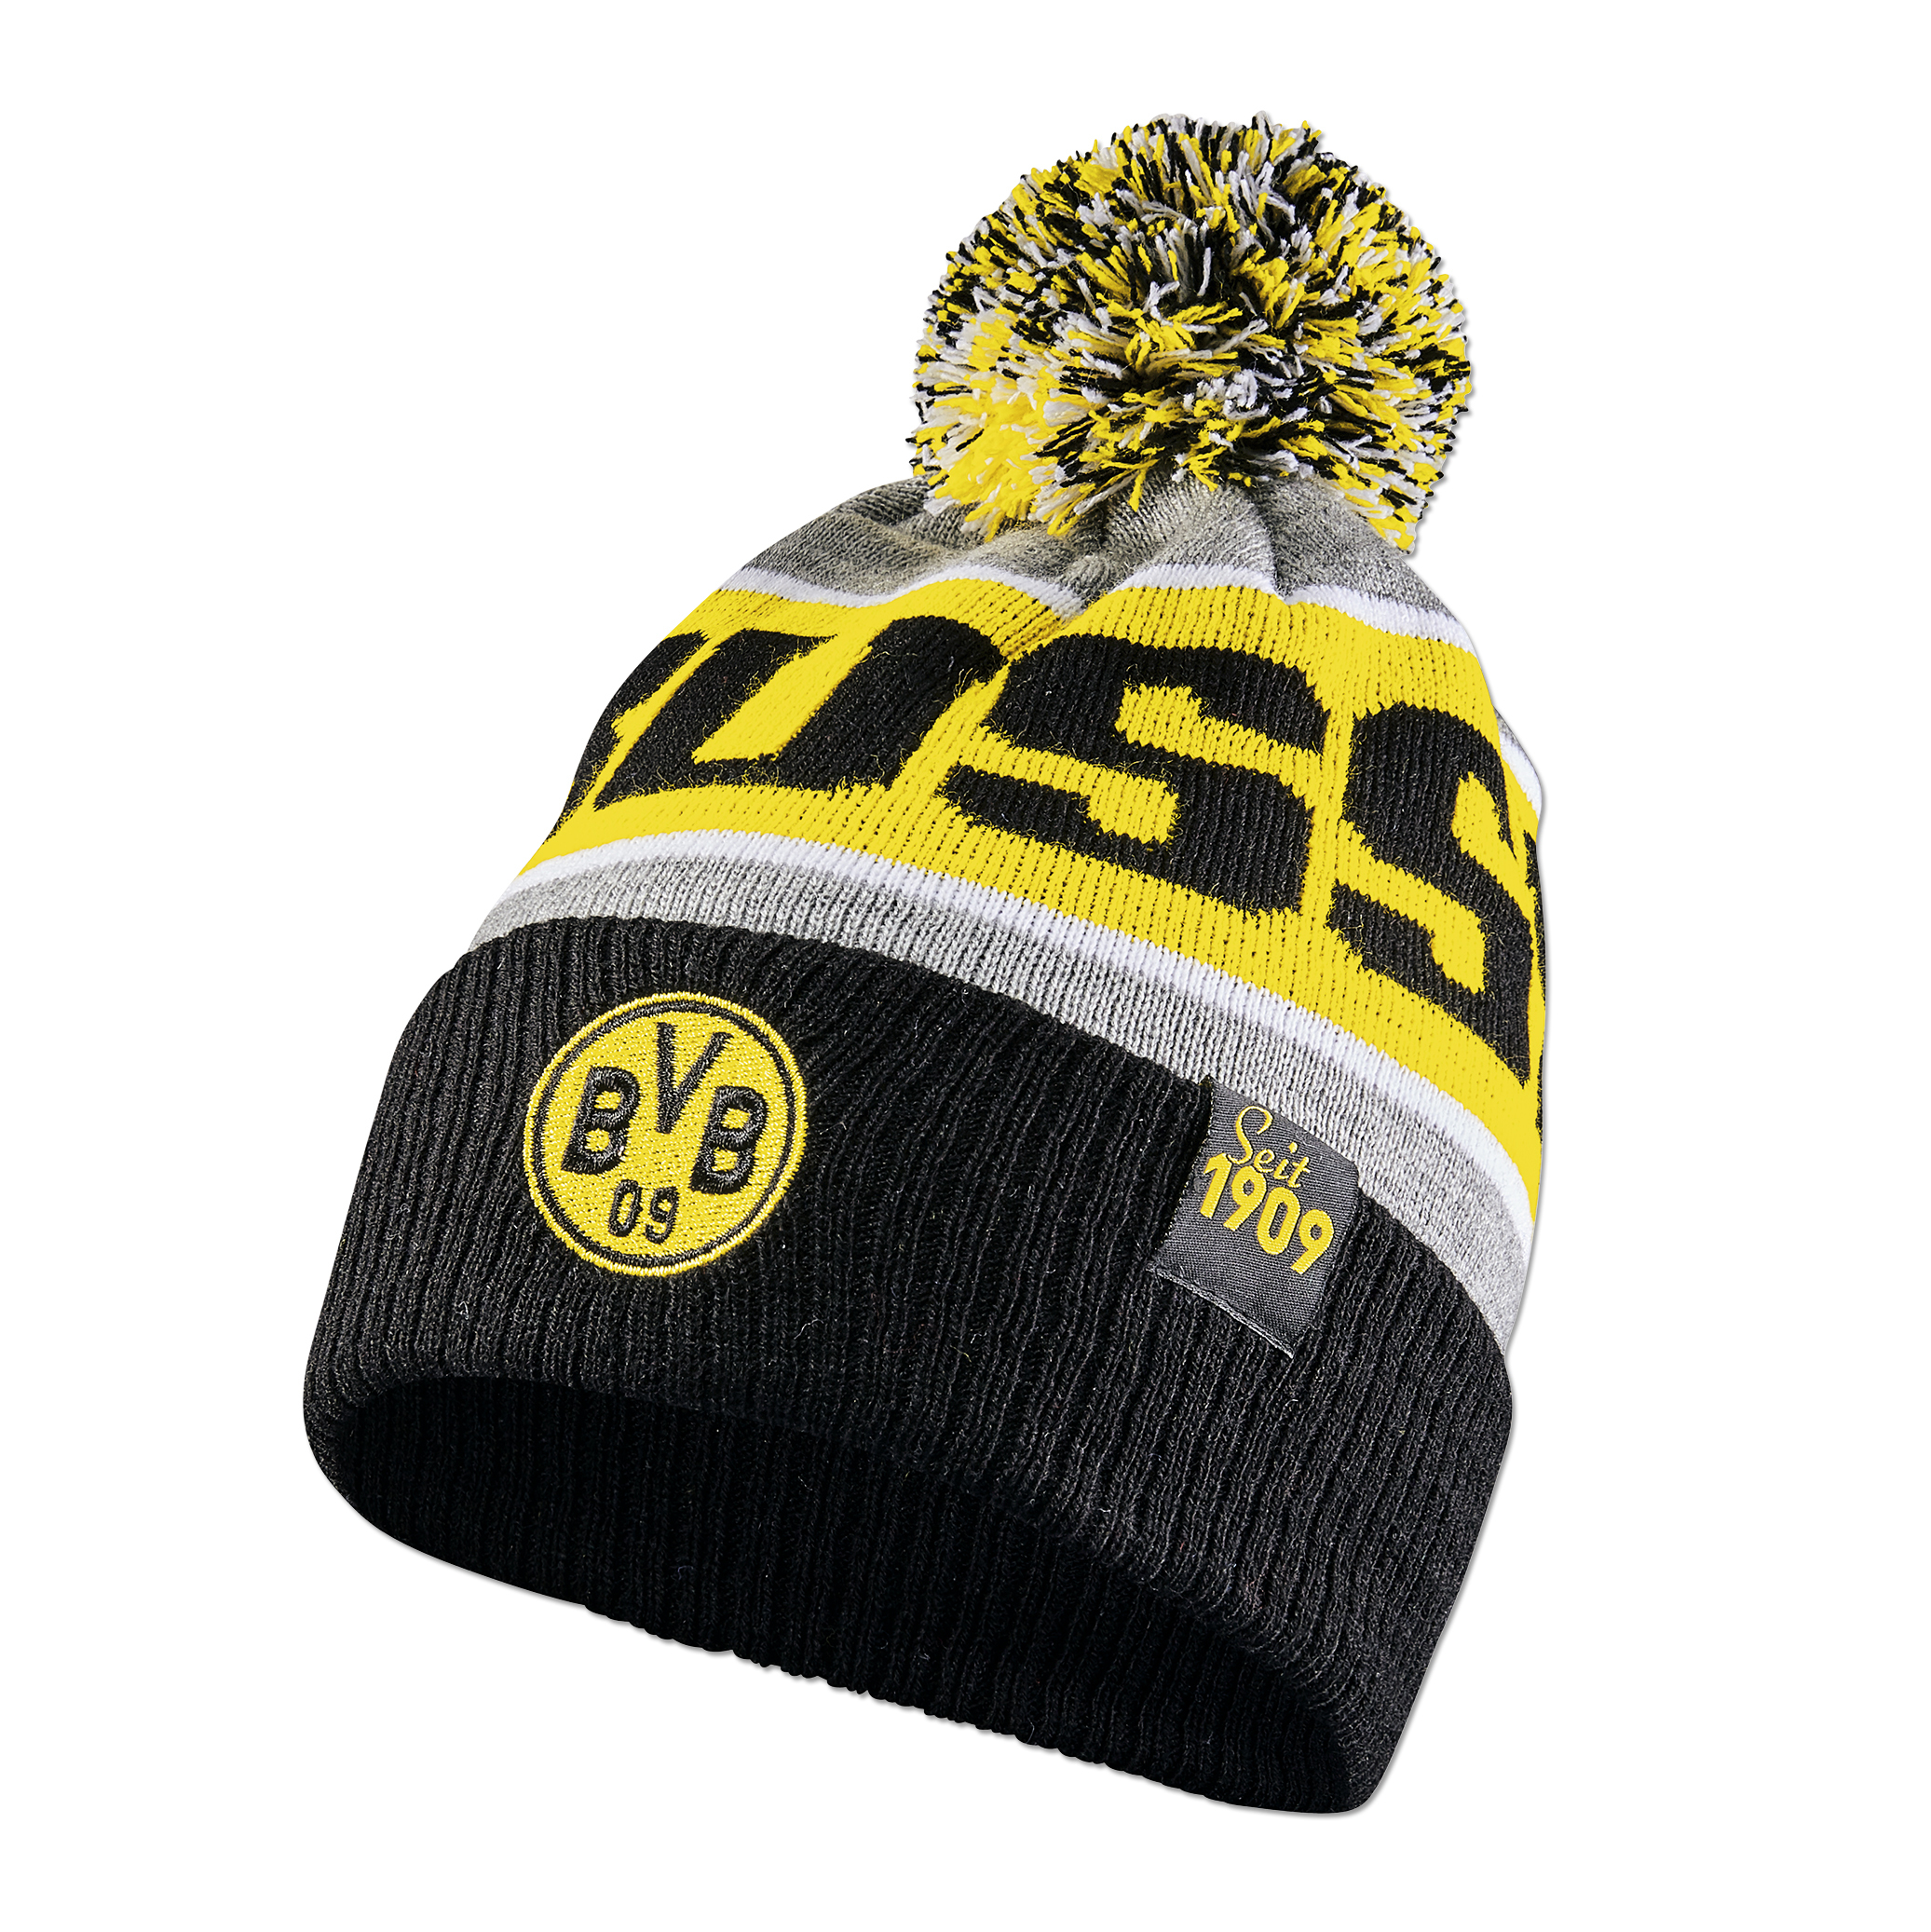 Borussia Dortmund BVB 09 zimná čiapka